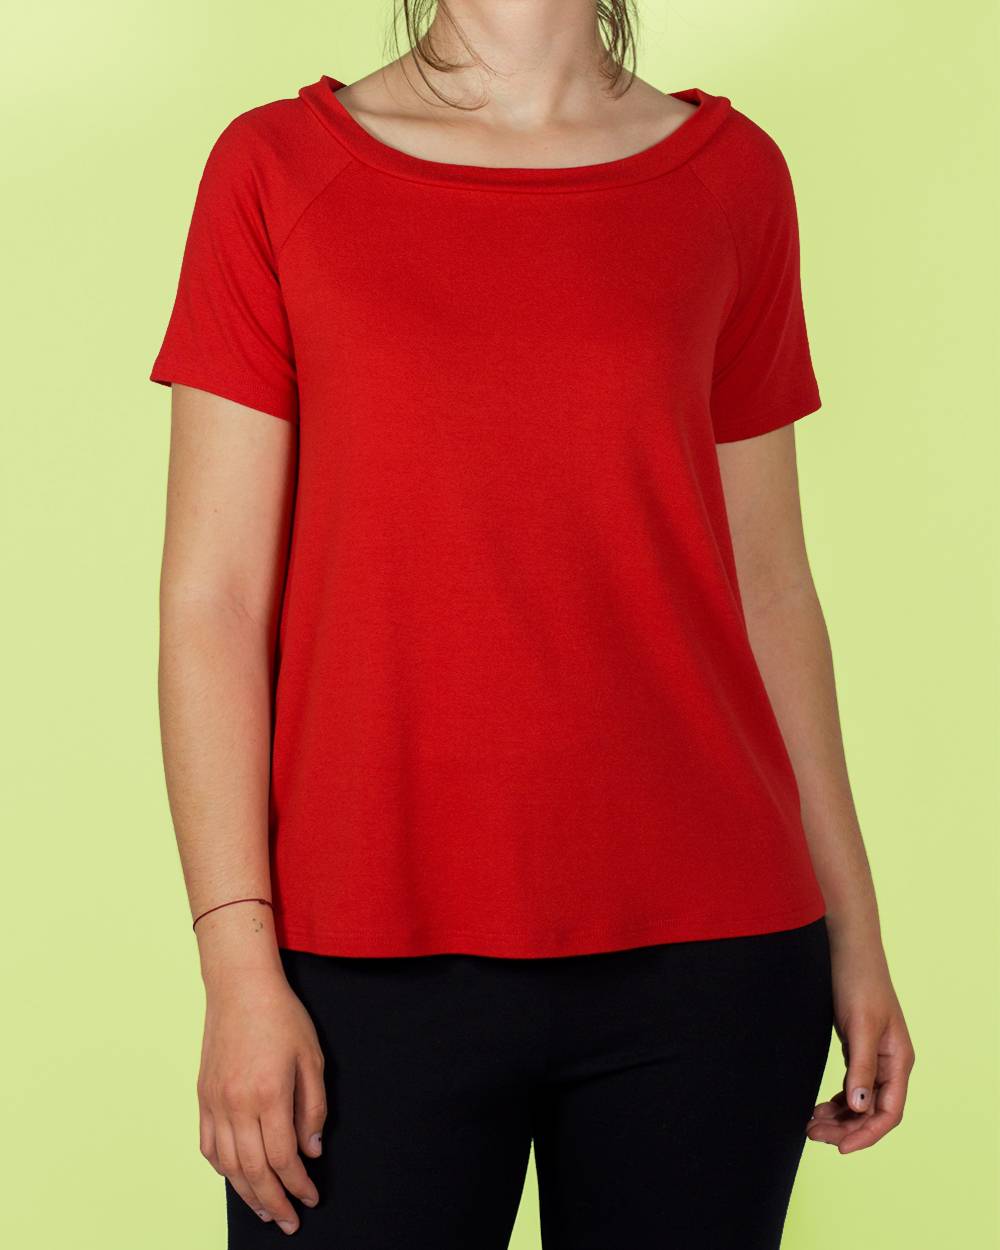 Camiseta roja de manga corta y cuello redondo